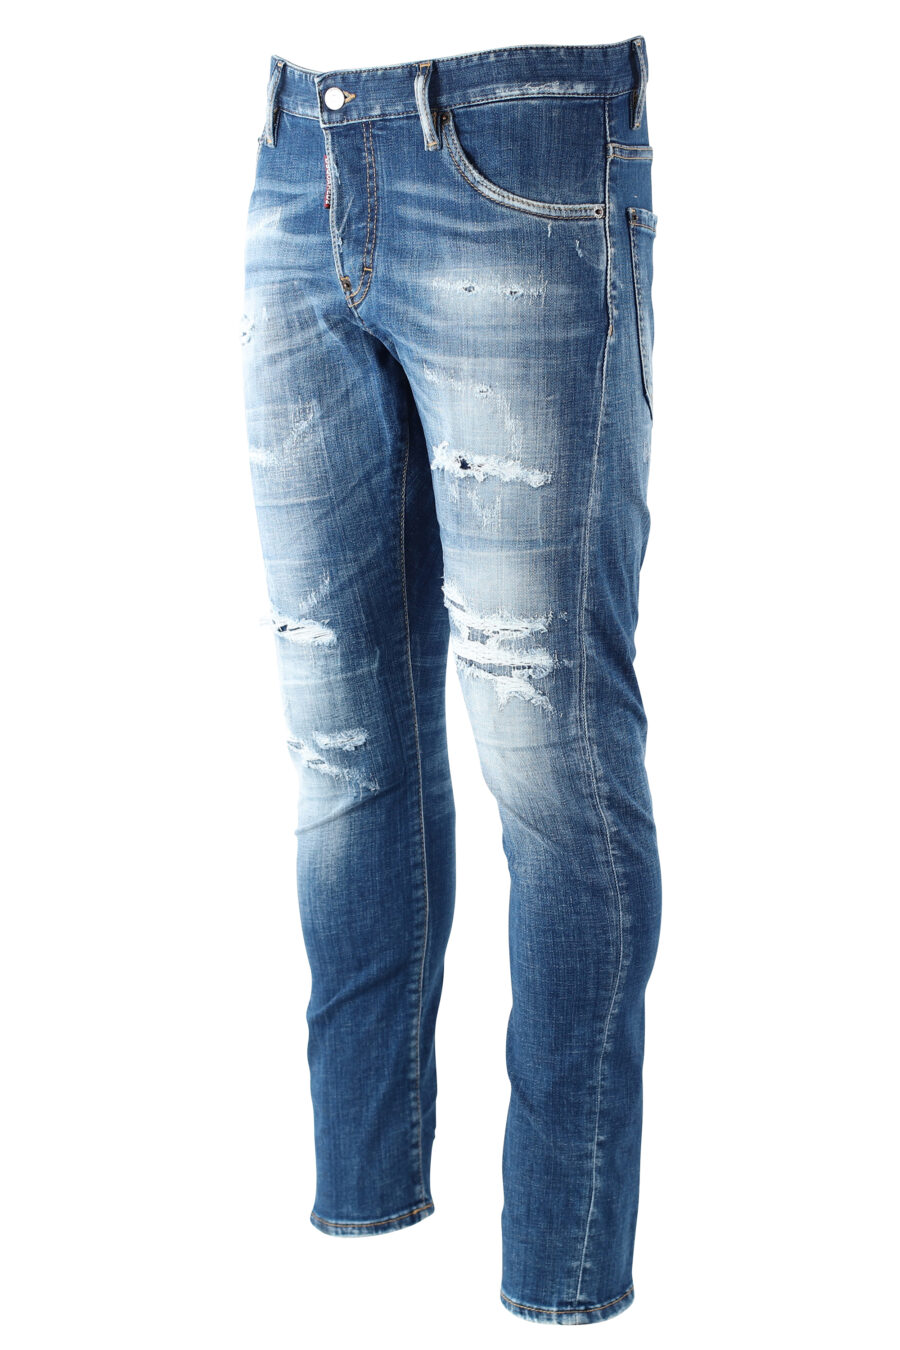 Pantalón vaquero "sexy twiste jean" azul desgastado con rotos - IMG 9694